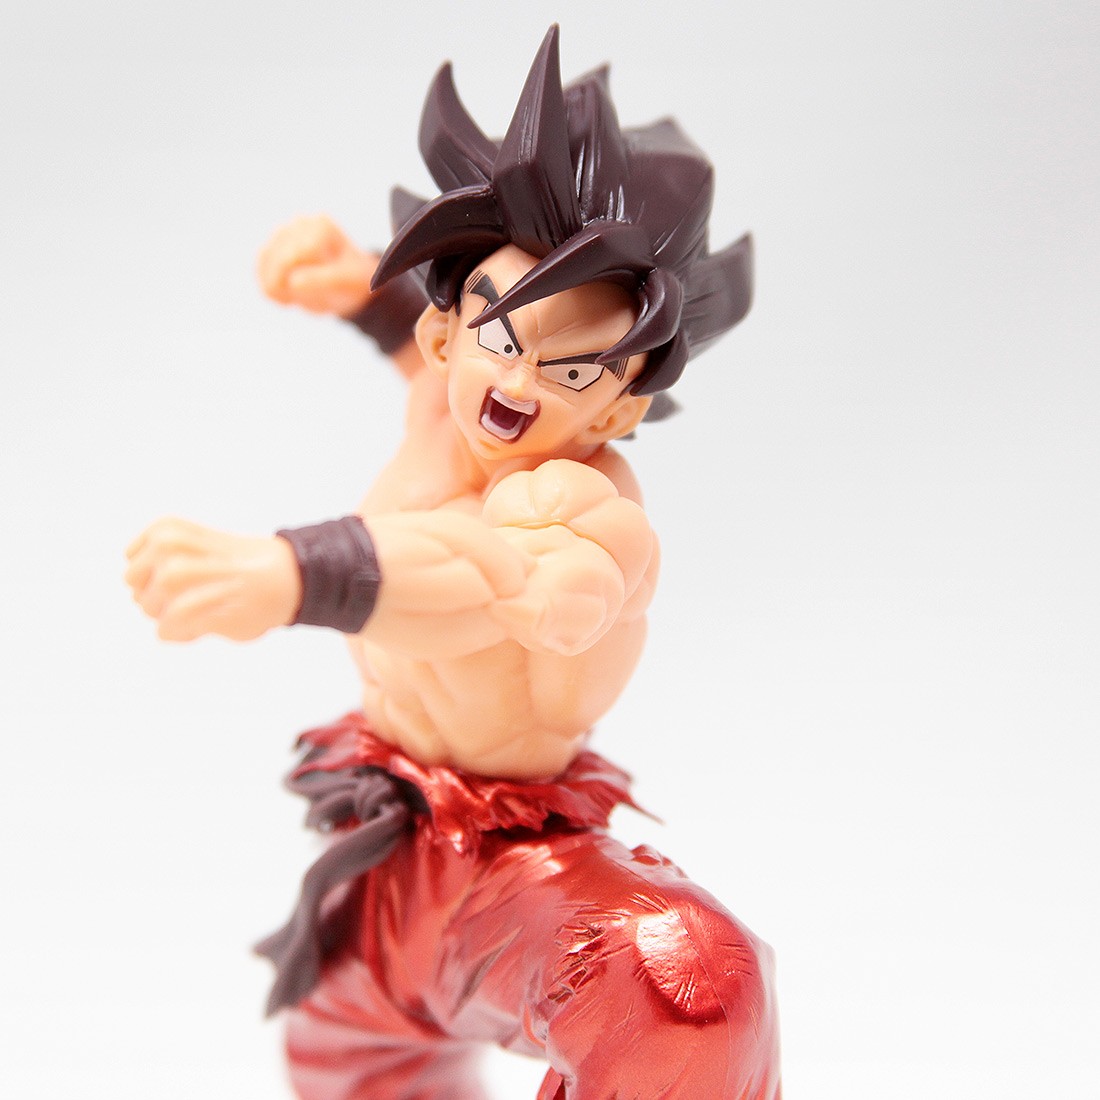 Action Figure Son Goku Dragon Ball Z Blood Of Sayajins - 28023